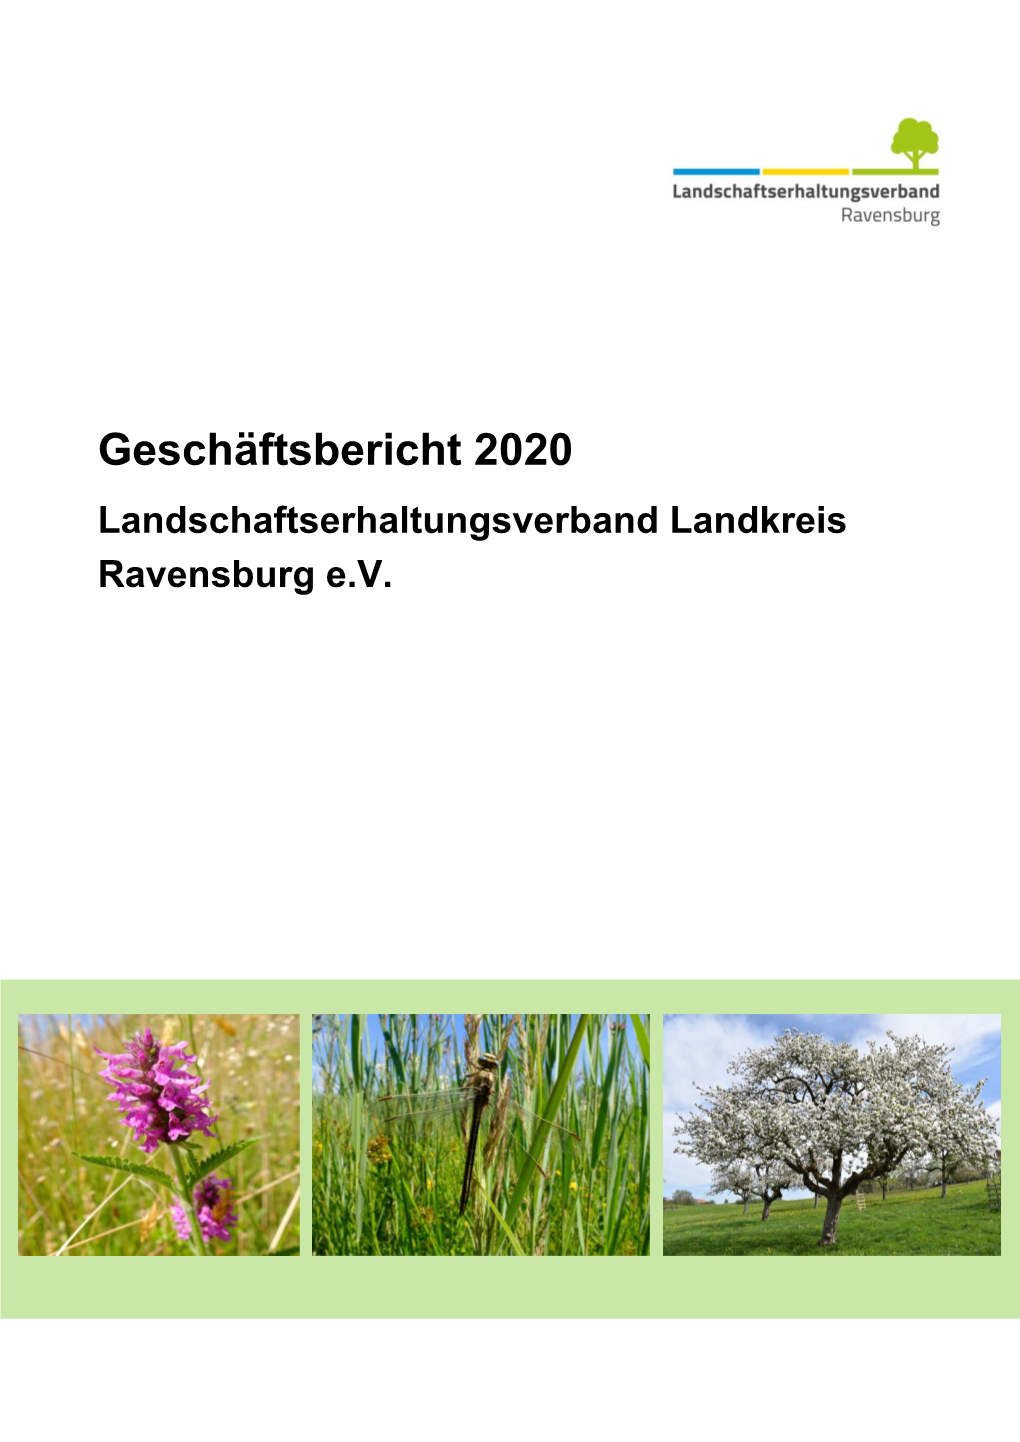 Geschäftsbericht 2020 Landschaftserhaltungsverband Landkreis Ravensburg E.V